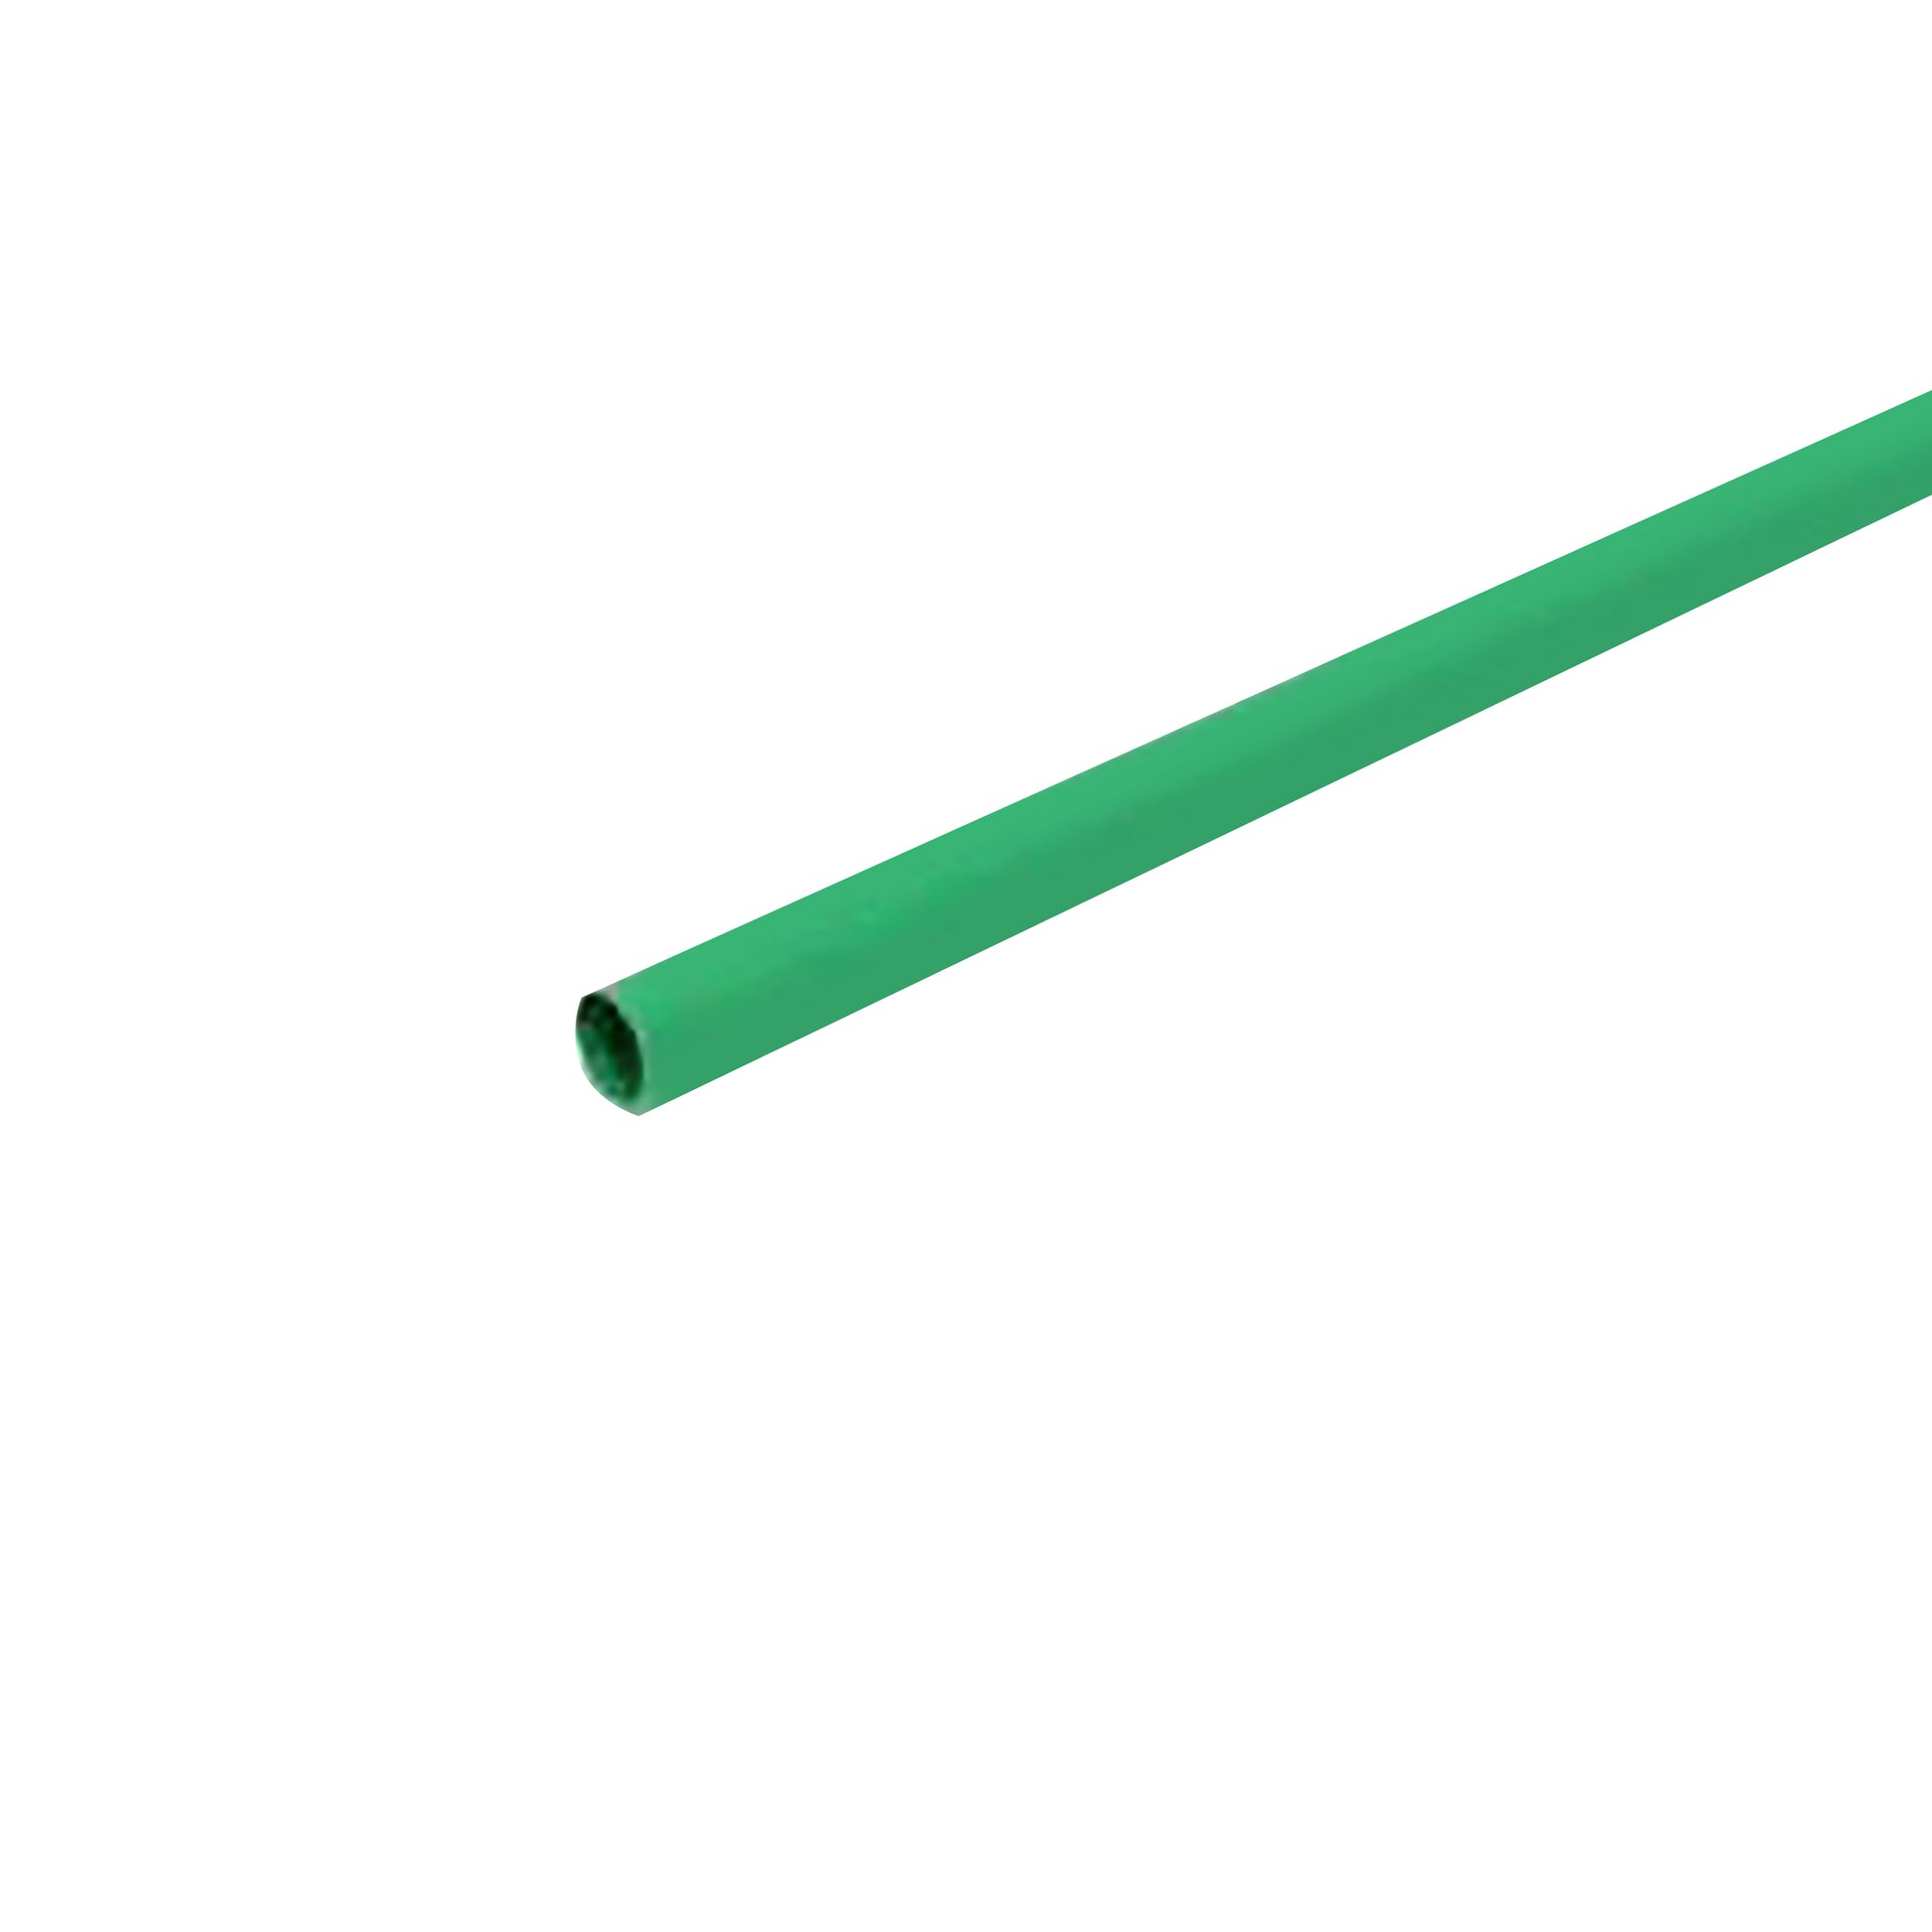 Flexible Thin Single Wall Non-Adhesive Heat Shrink Tubing 2:1 Green 3/8" ID - 100' Ft Spool